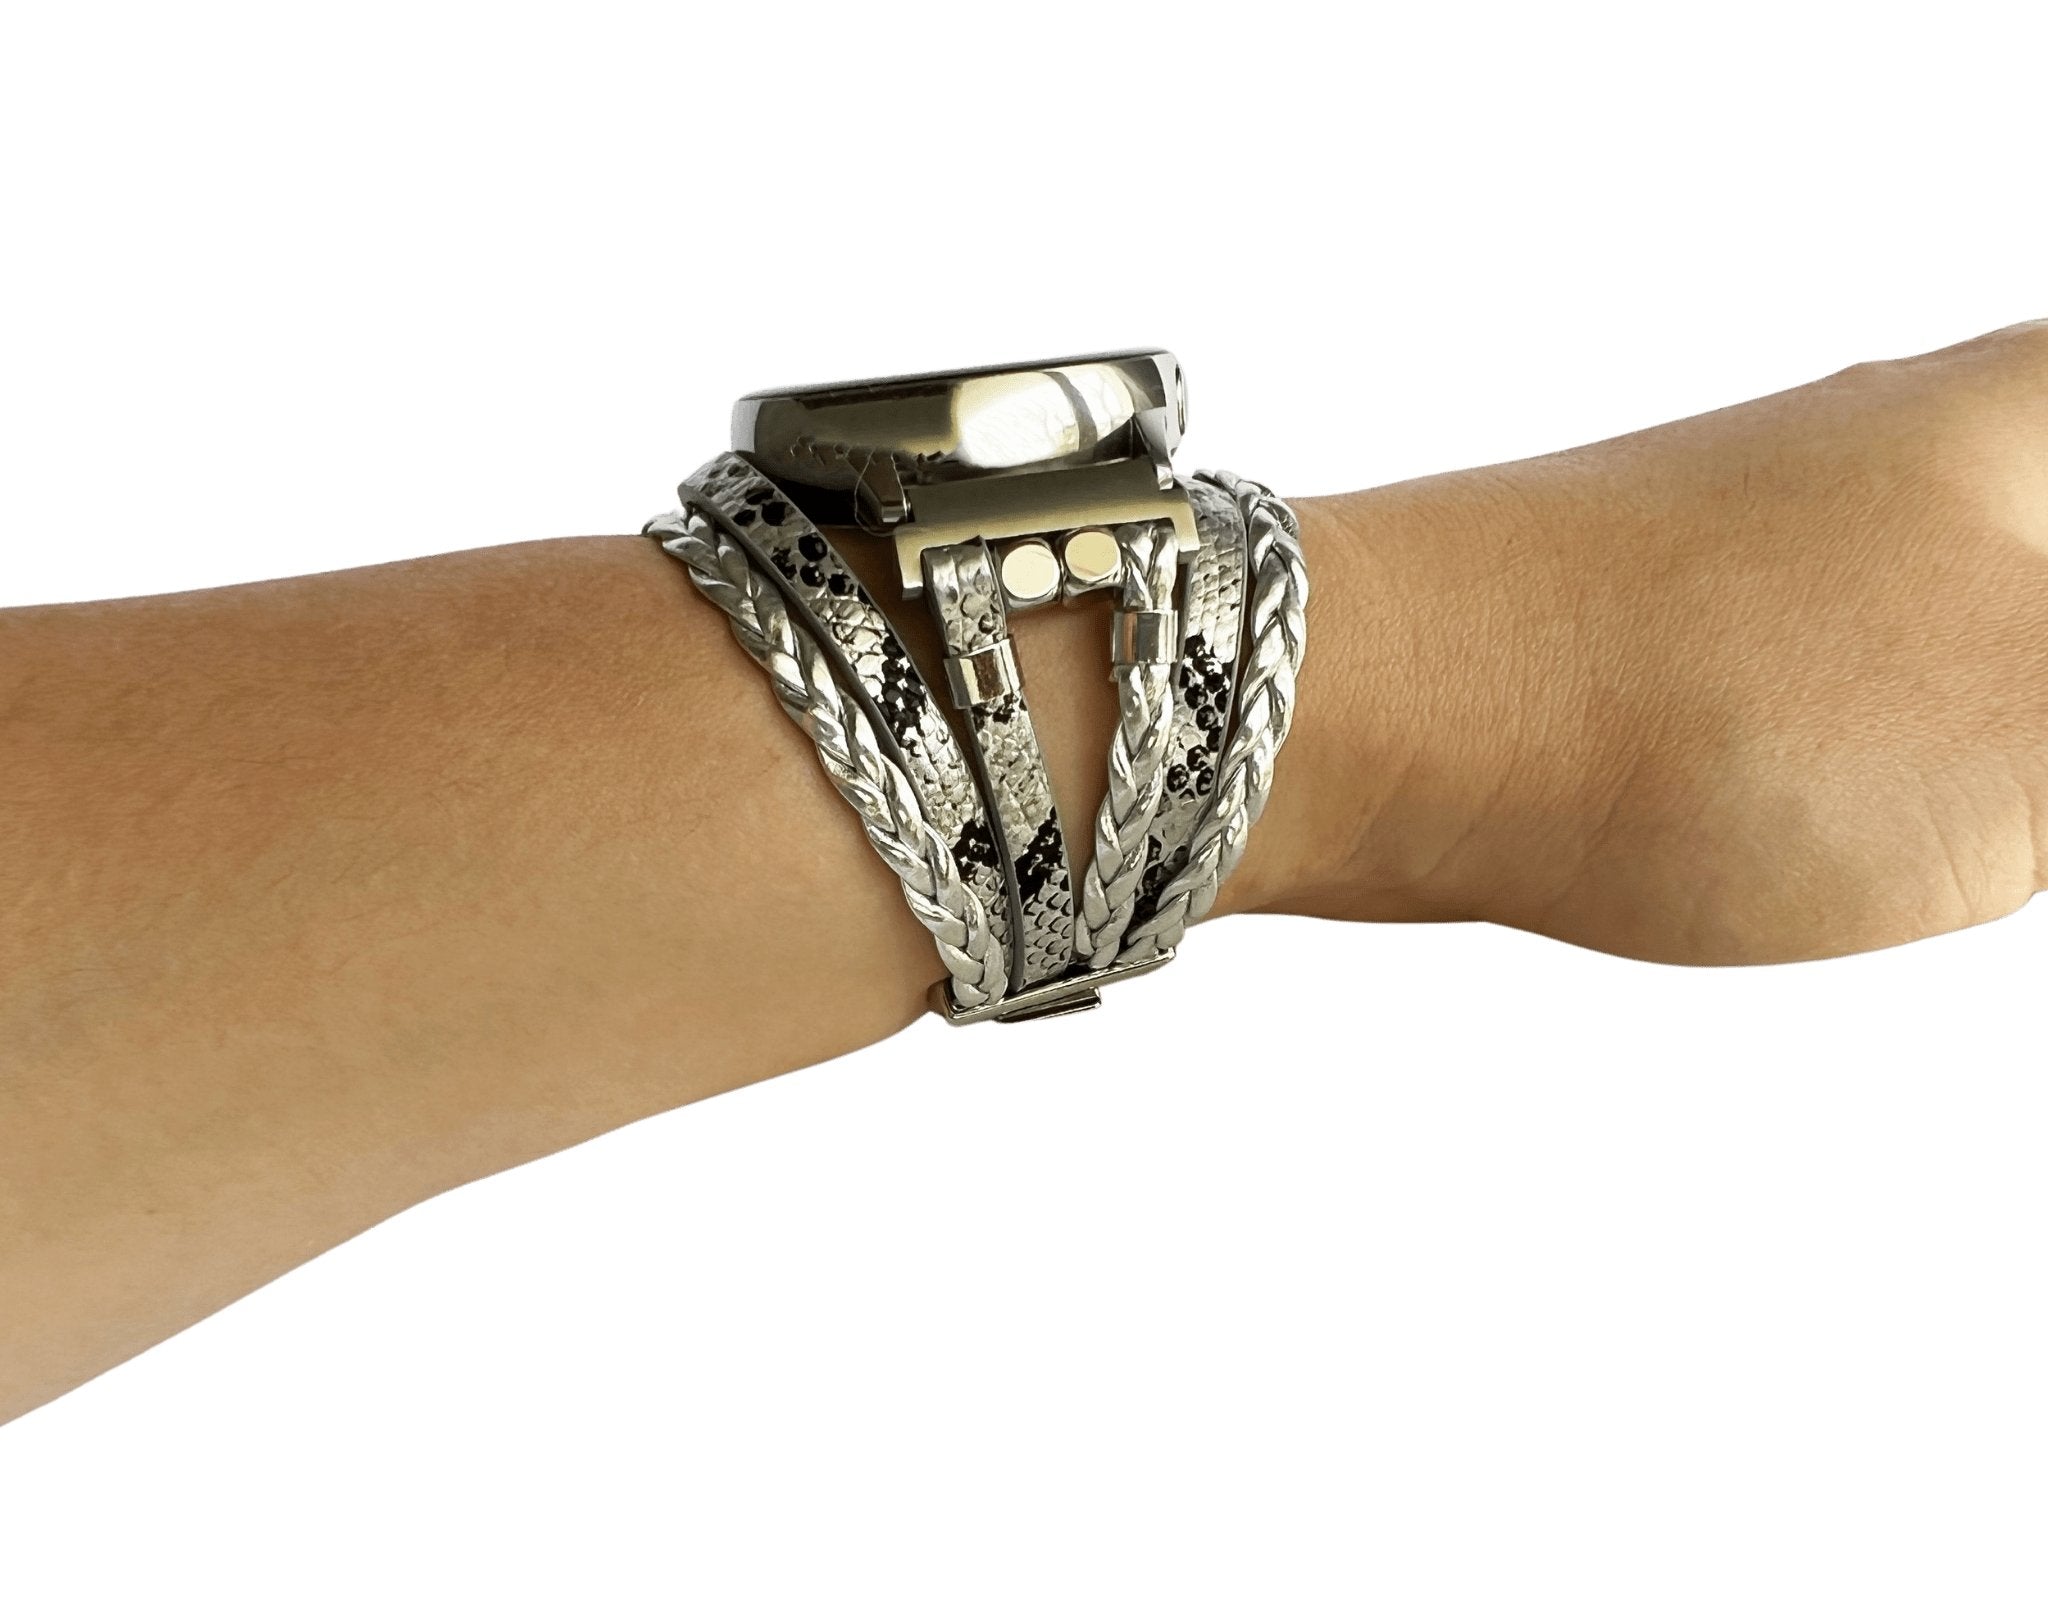 Posh Chic Silver Snake Watch Bracelet Band - Mareevo